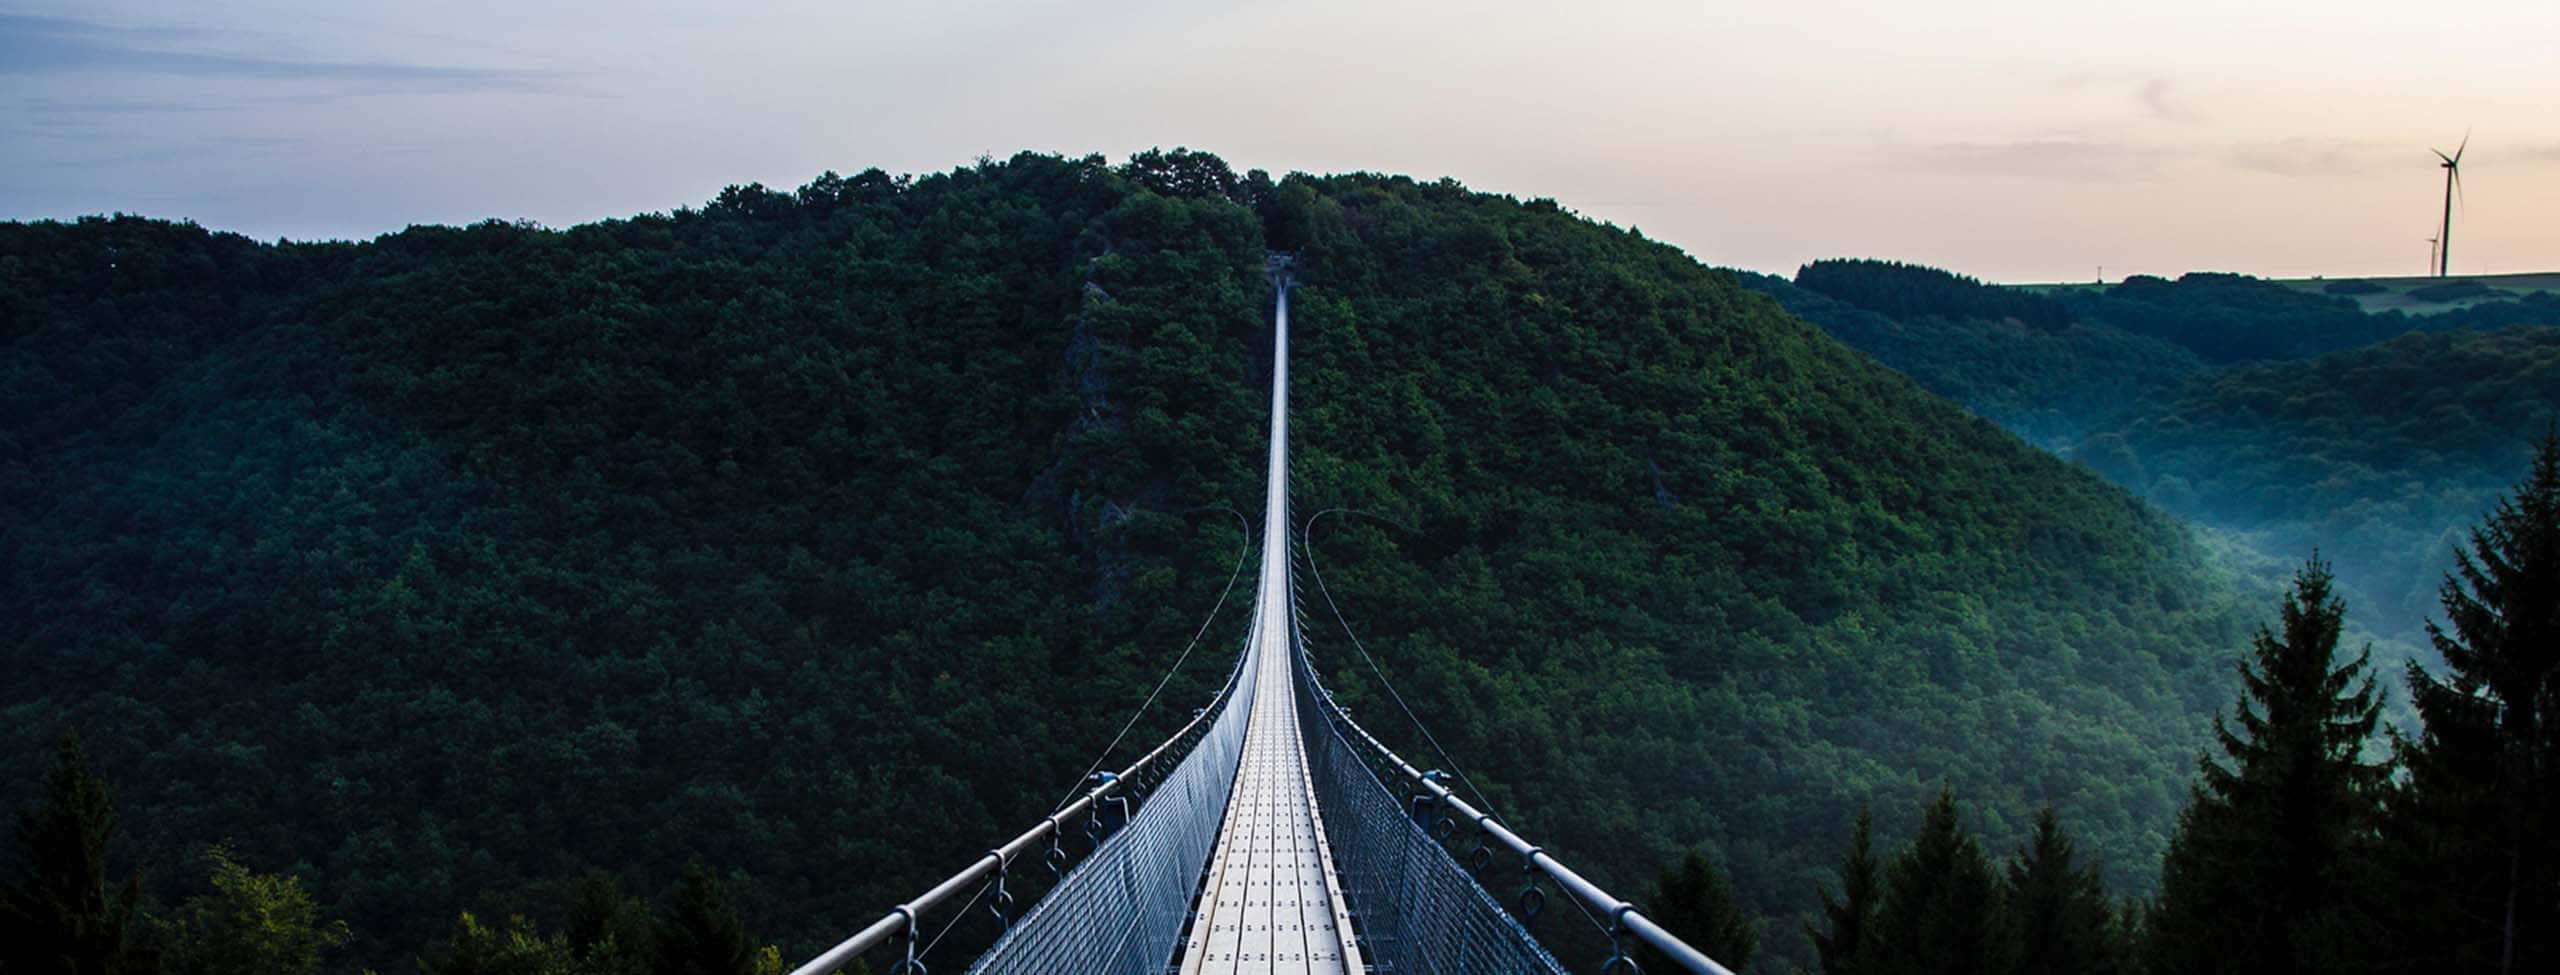 hanging bridge leading to a mountain